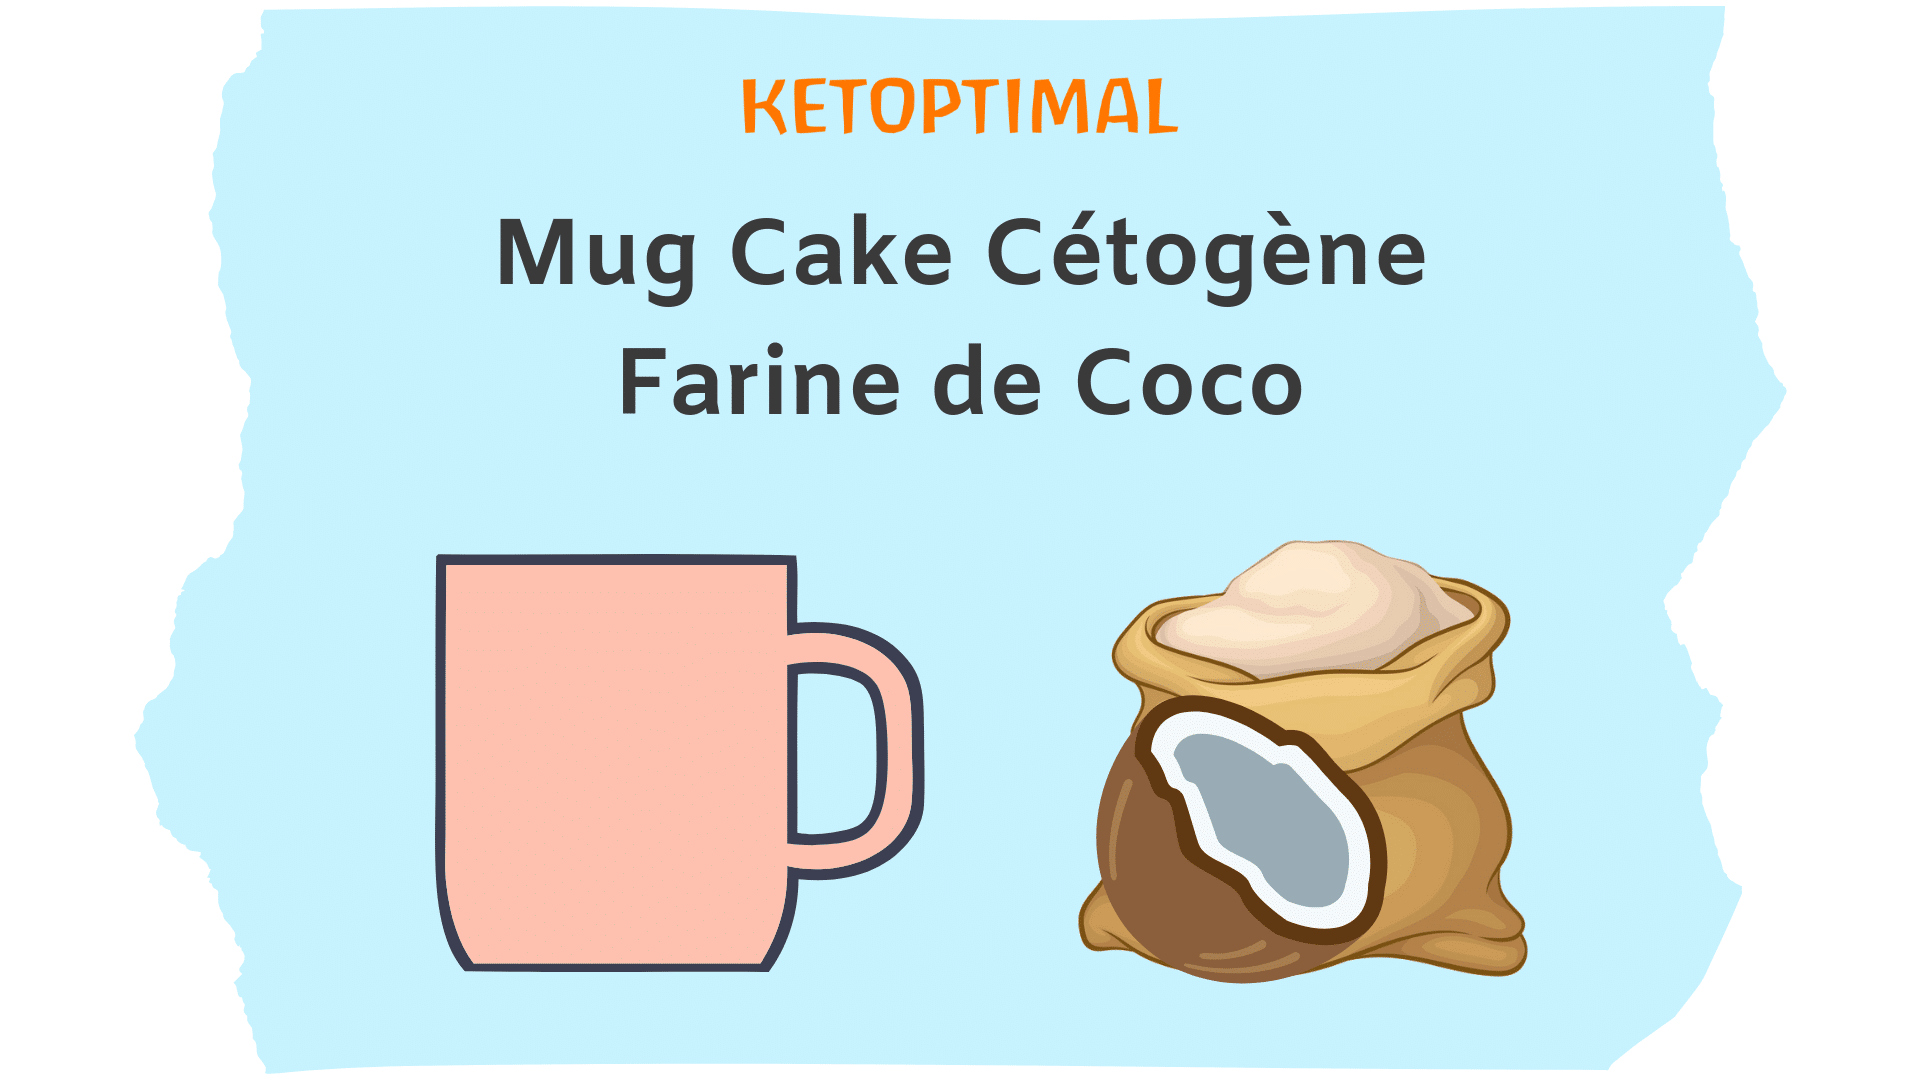 Mug Cake Cétogène à la Farine de Coco